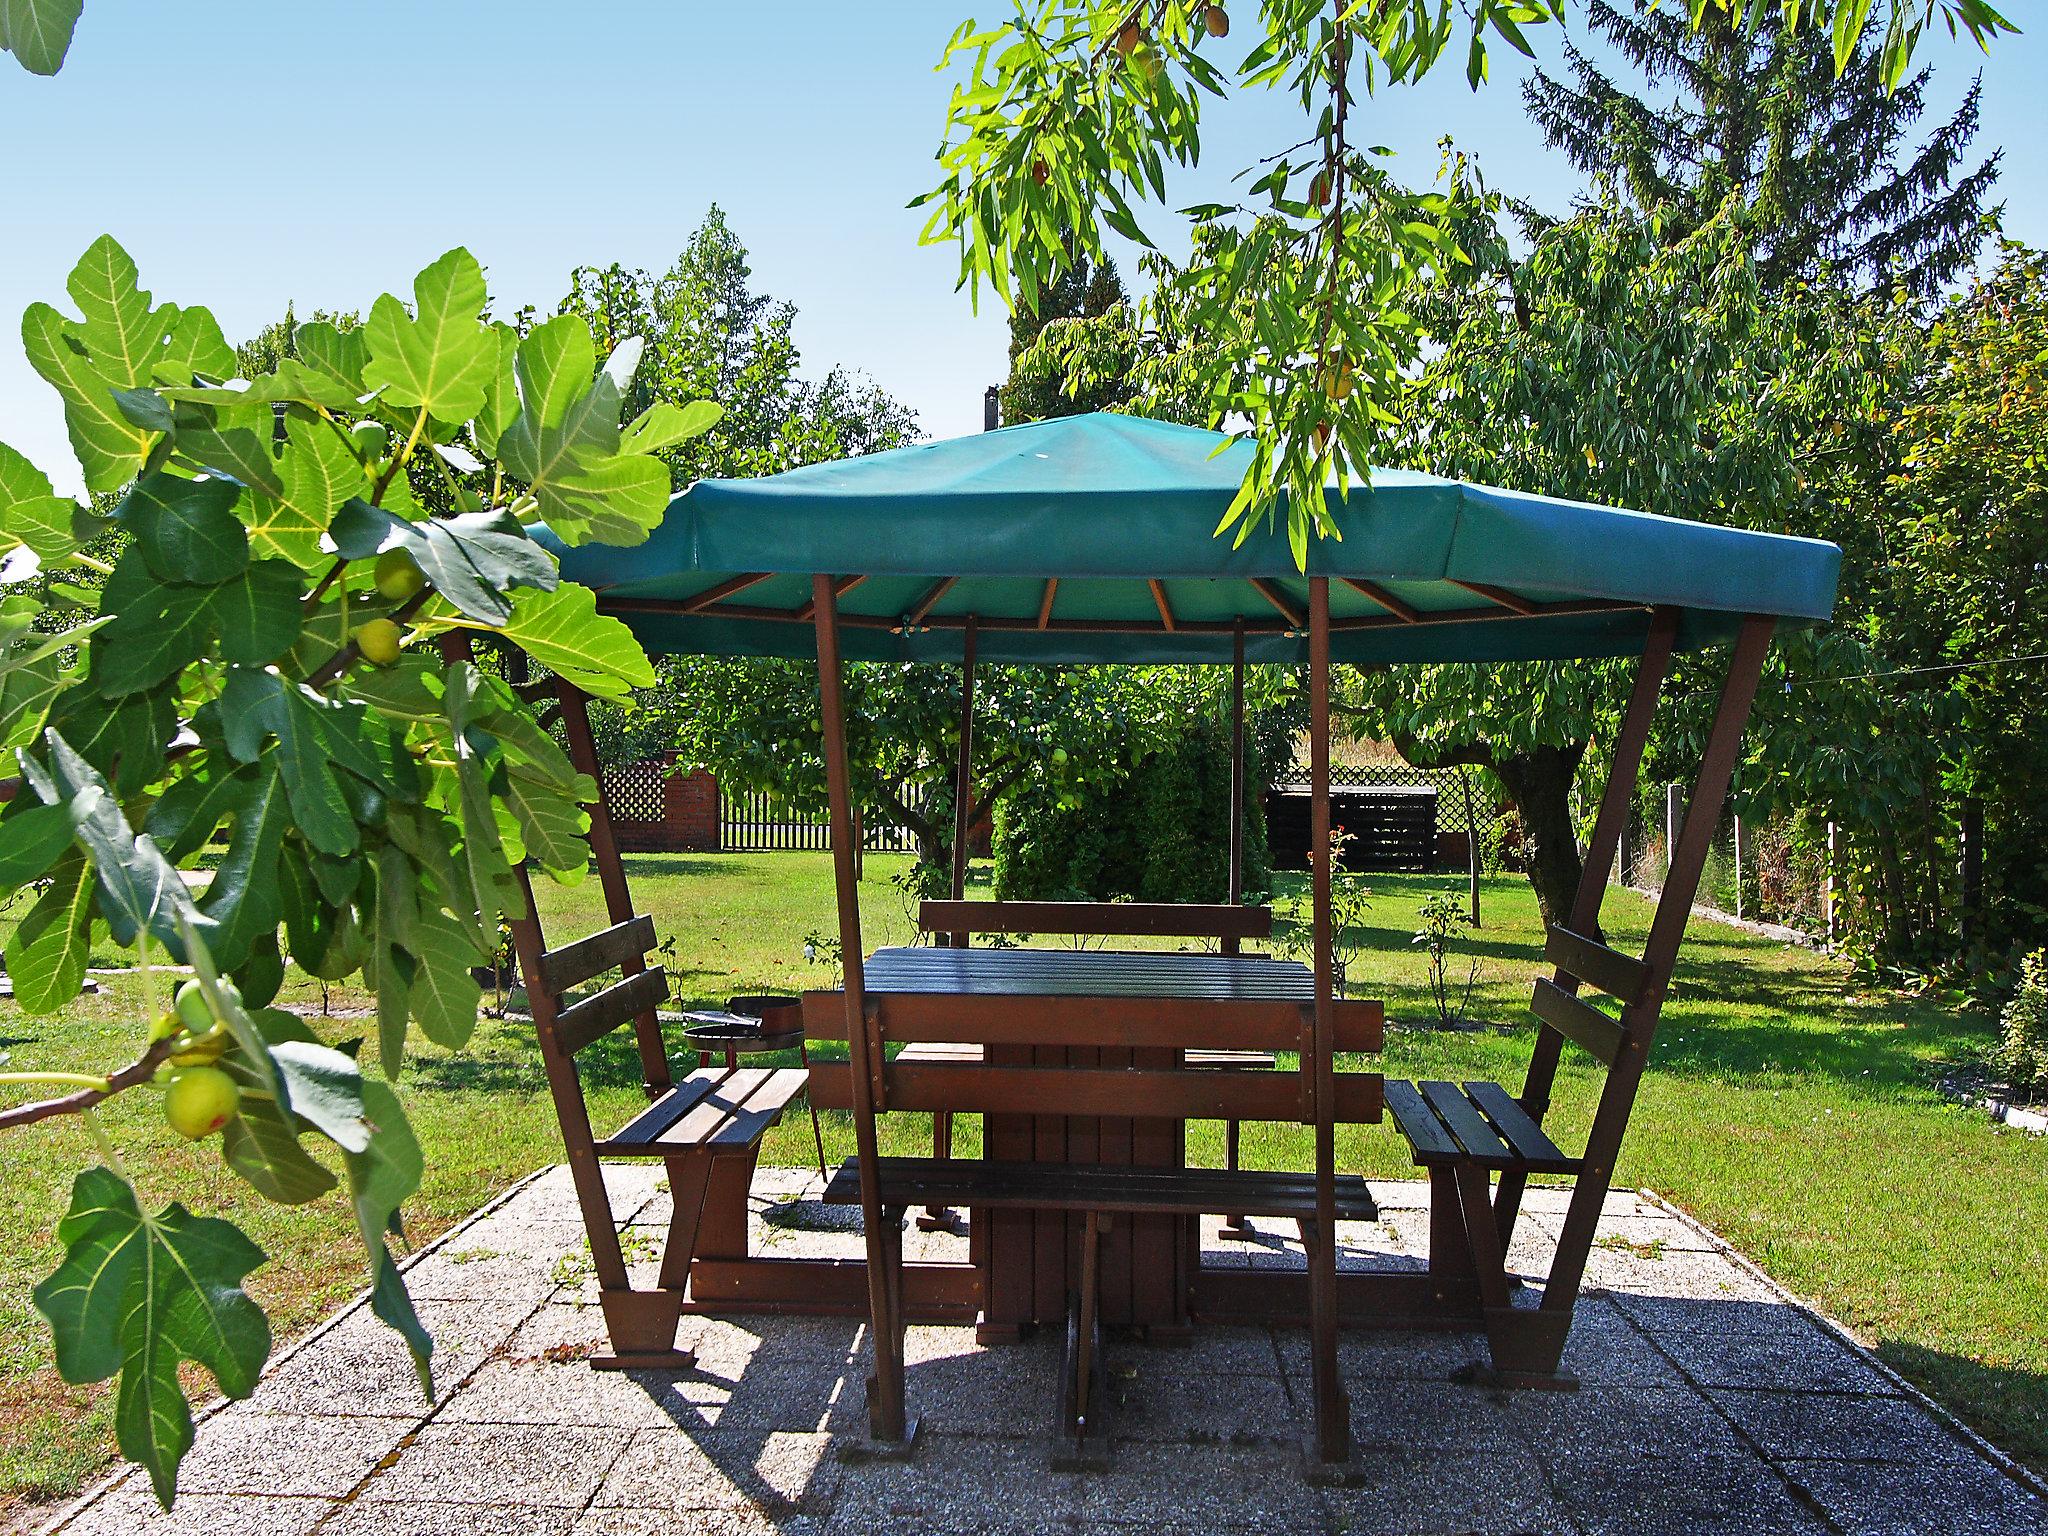 Foto 3 - Casa con 4 camere da letto a Balatonkeresztúr con piscina privata e giardino